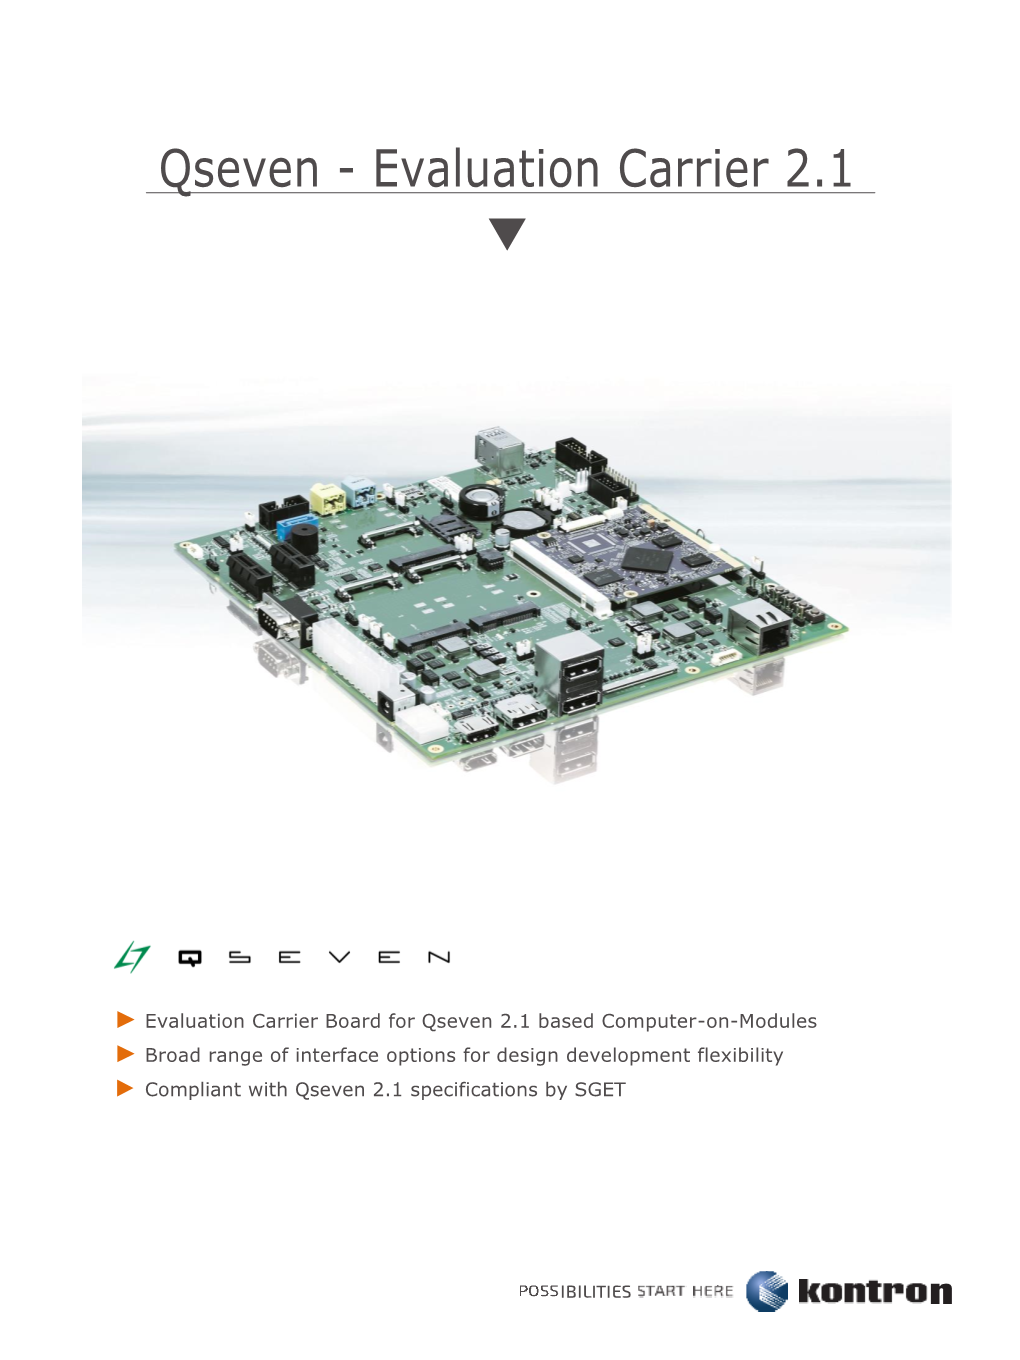 Qseven - Evaluation Carrier 2.1 